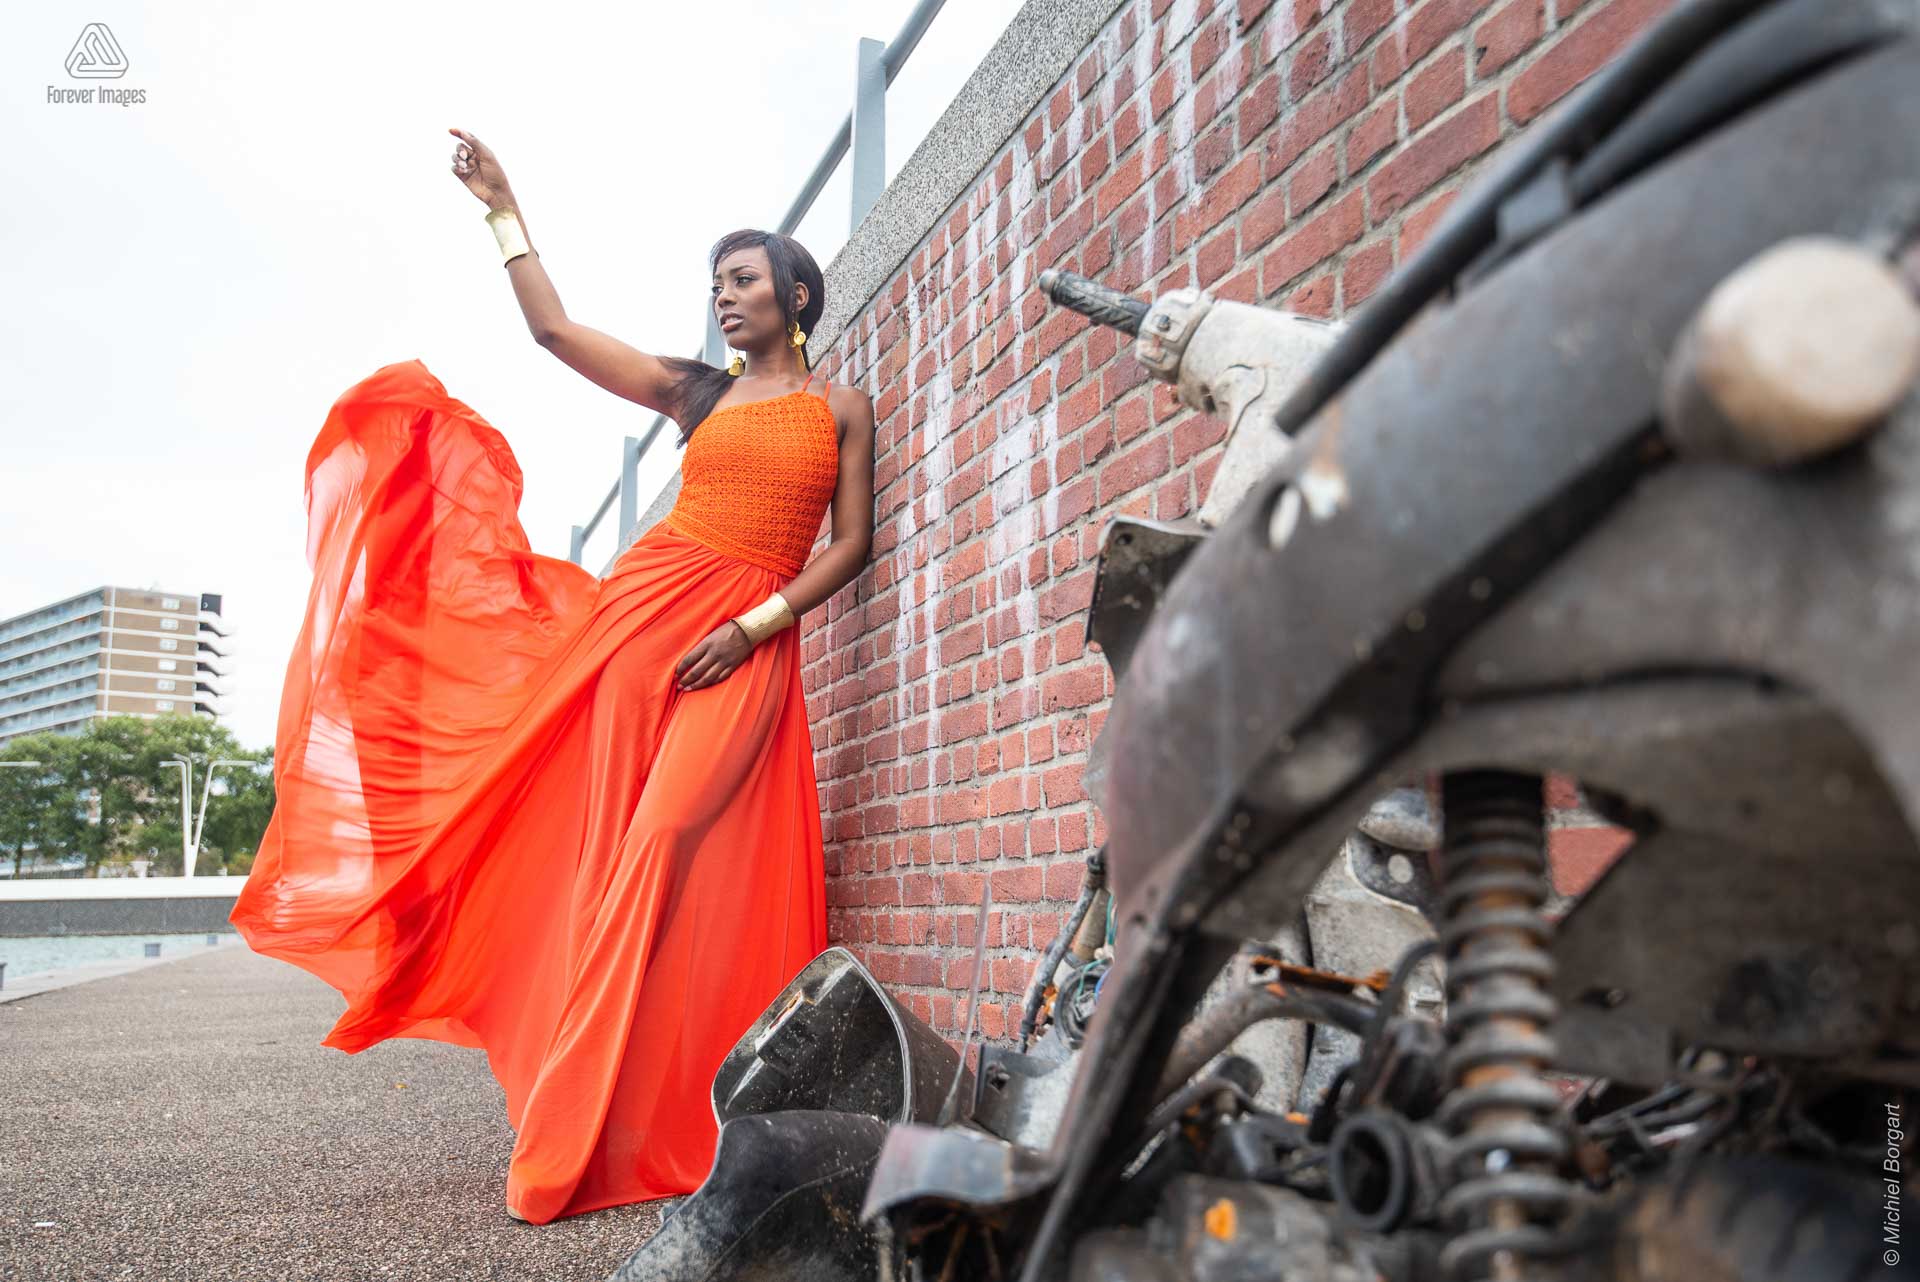 Fashionfoto urben shoot oranje jurk muur Amsterdam | Mariana Pietersz David Cardenas Miss Avantgarde | Fashionfotograaf Michiel Borgart - Forever Images.